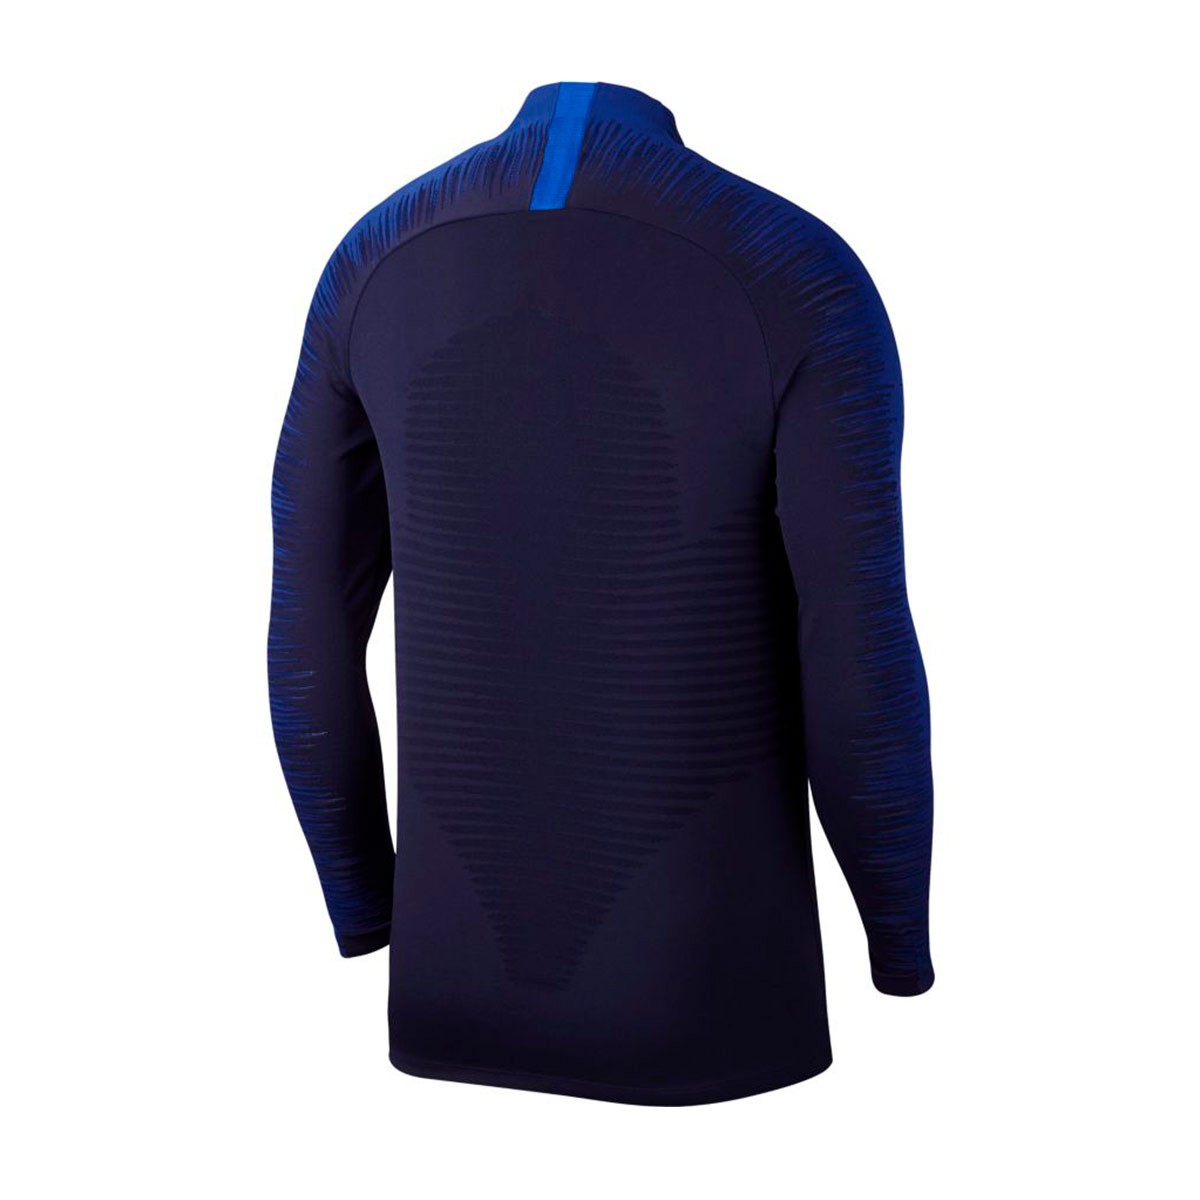 Sweatshirt Nike VaporKnit Strike Drill Top Blackened blue-Hyper royal -  Football store Fútbol Emotion